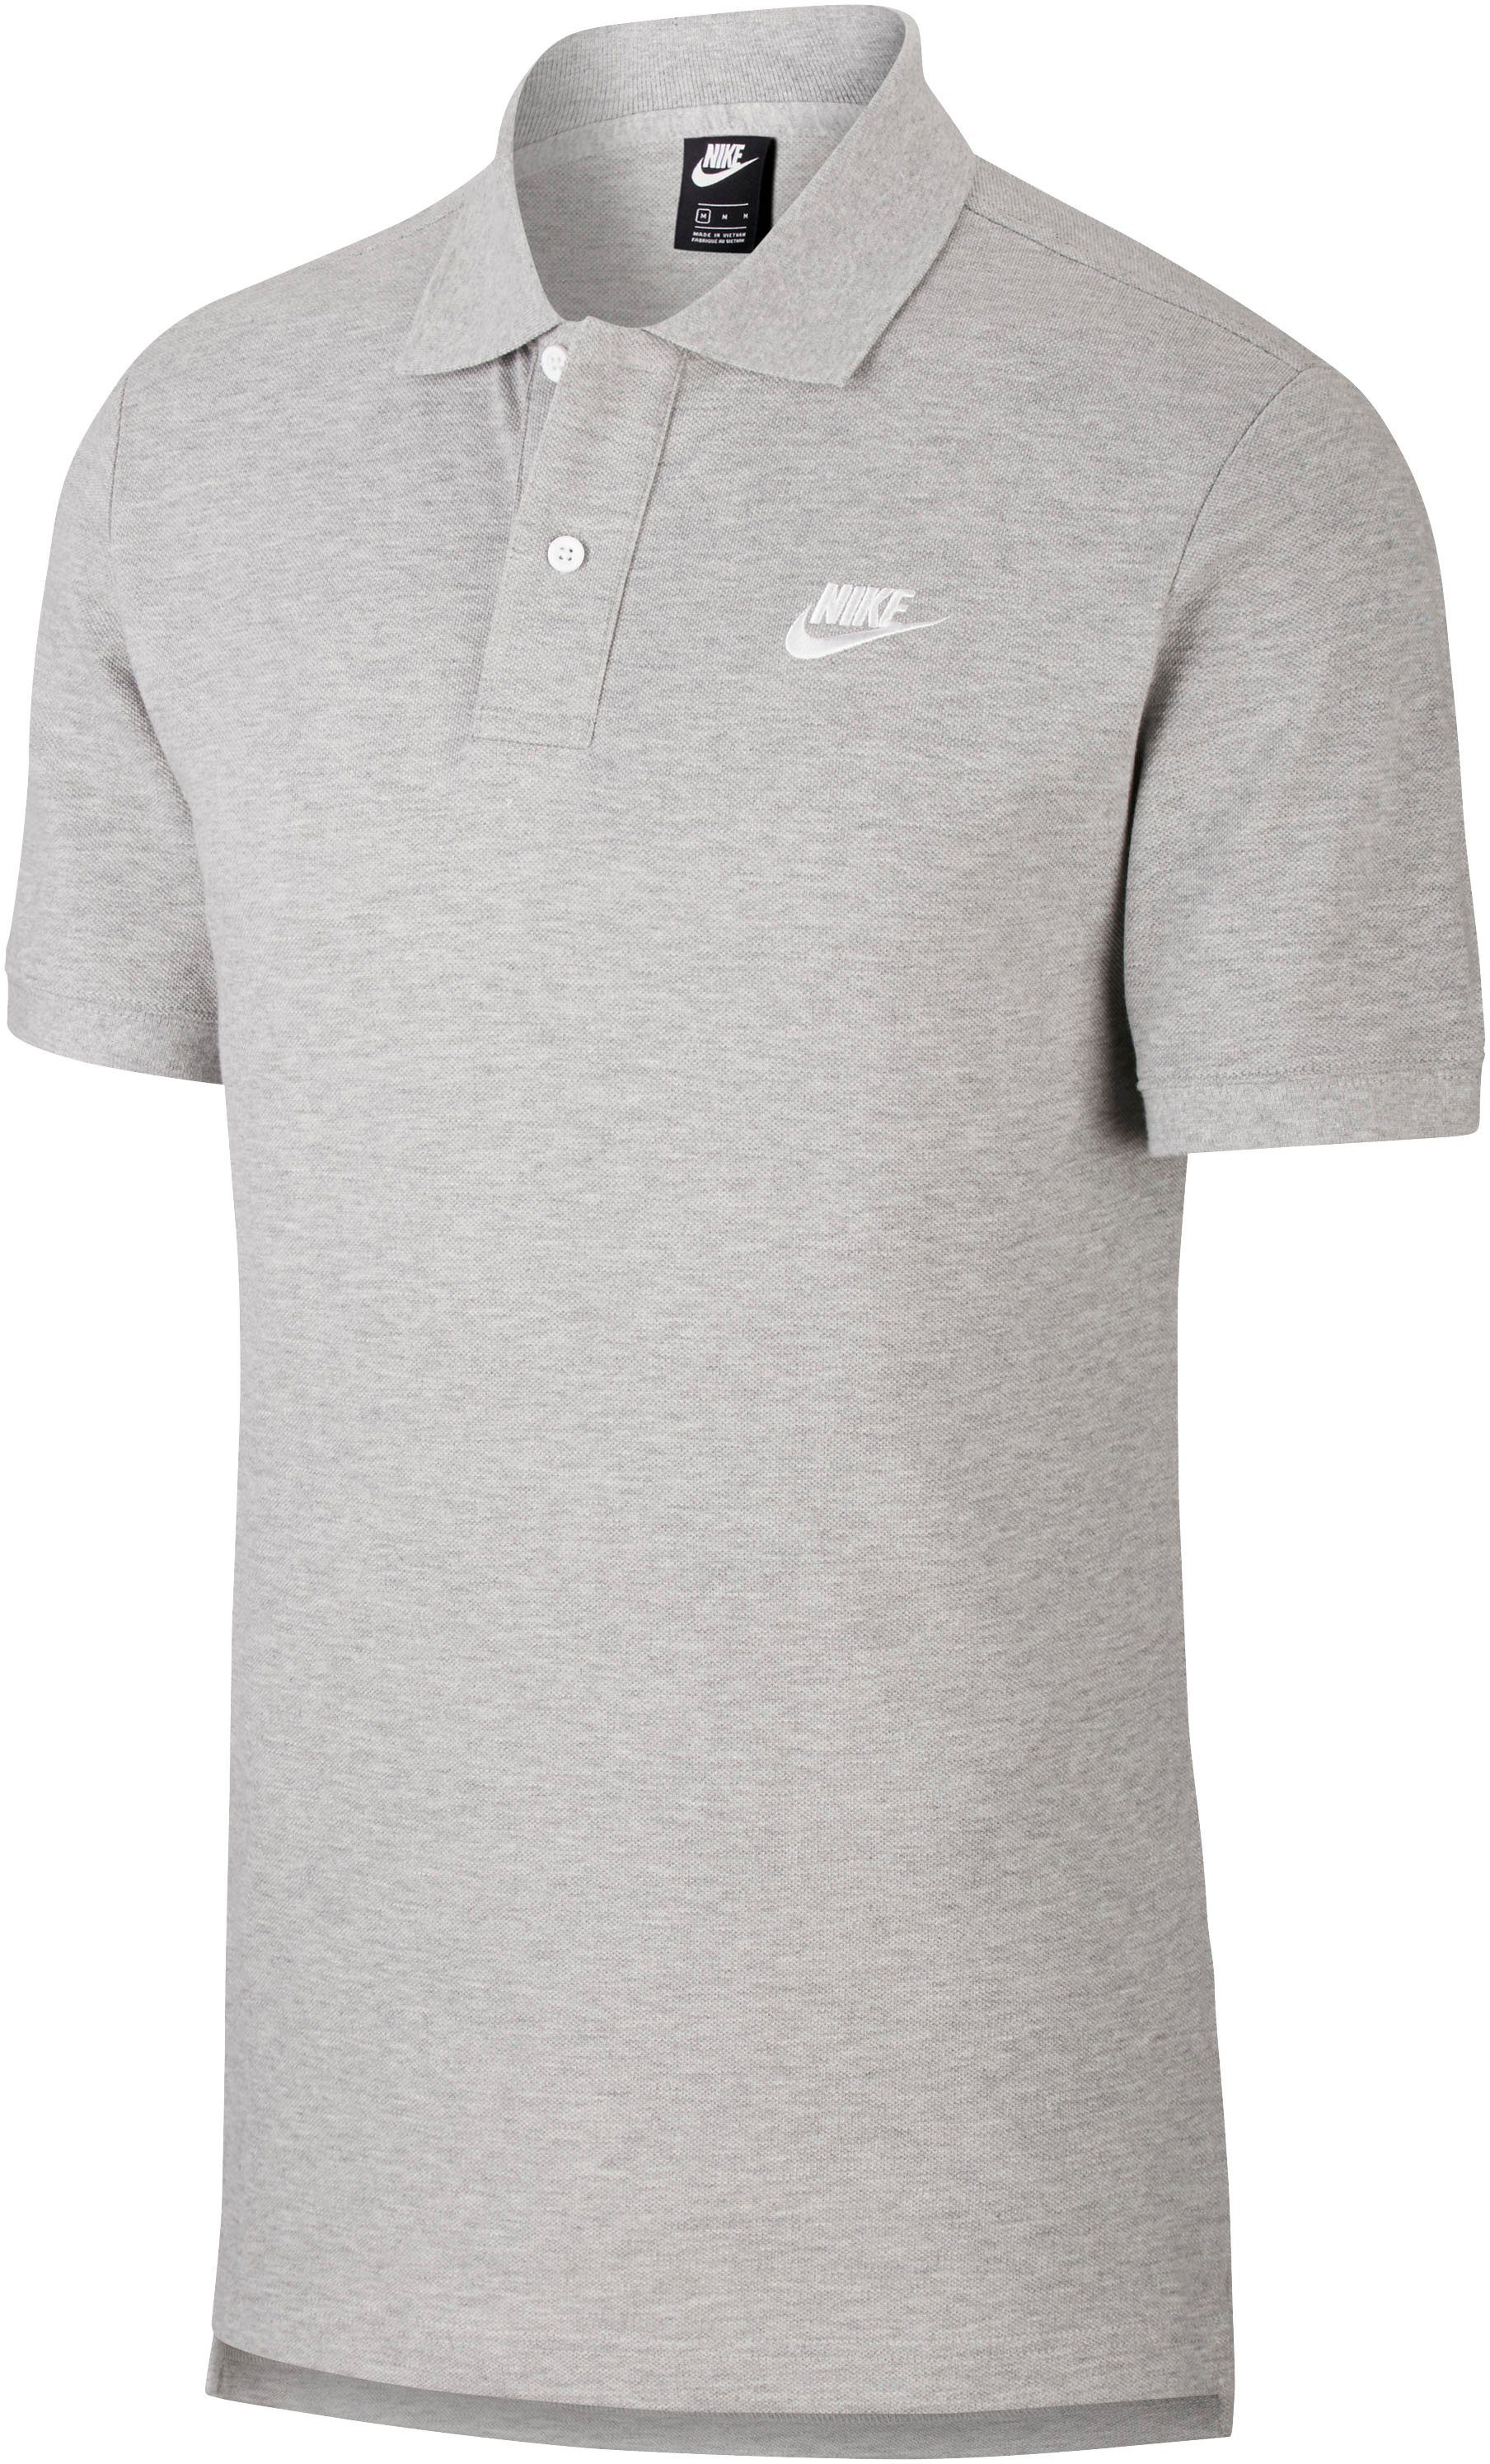 Polo HEATHER/WHITE Poloshirt DK GREY Nike Sportswear Men's